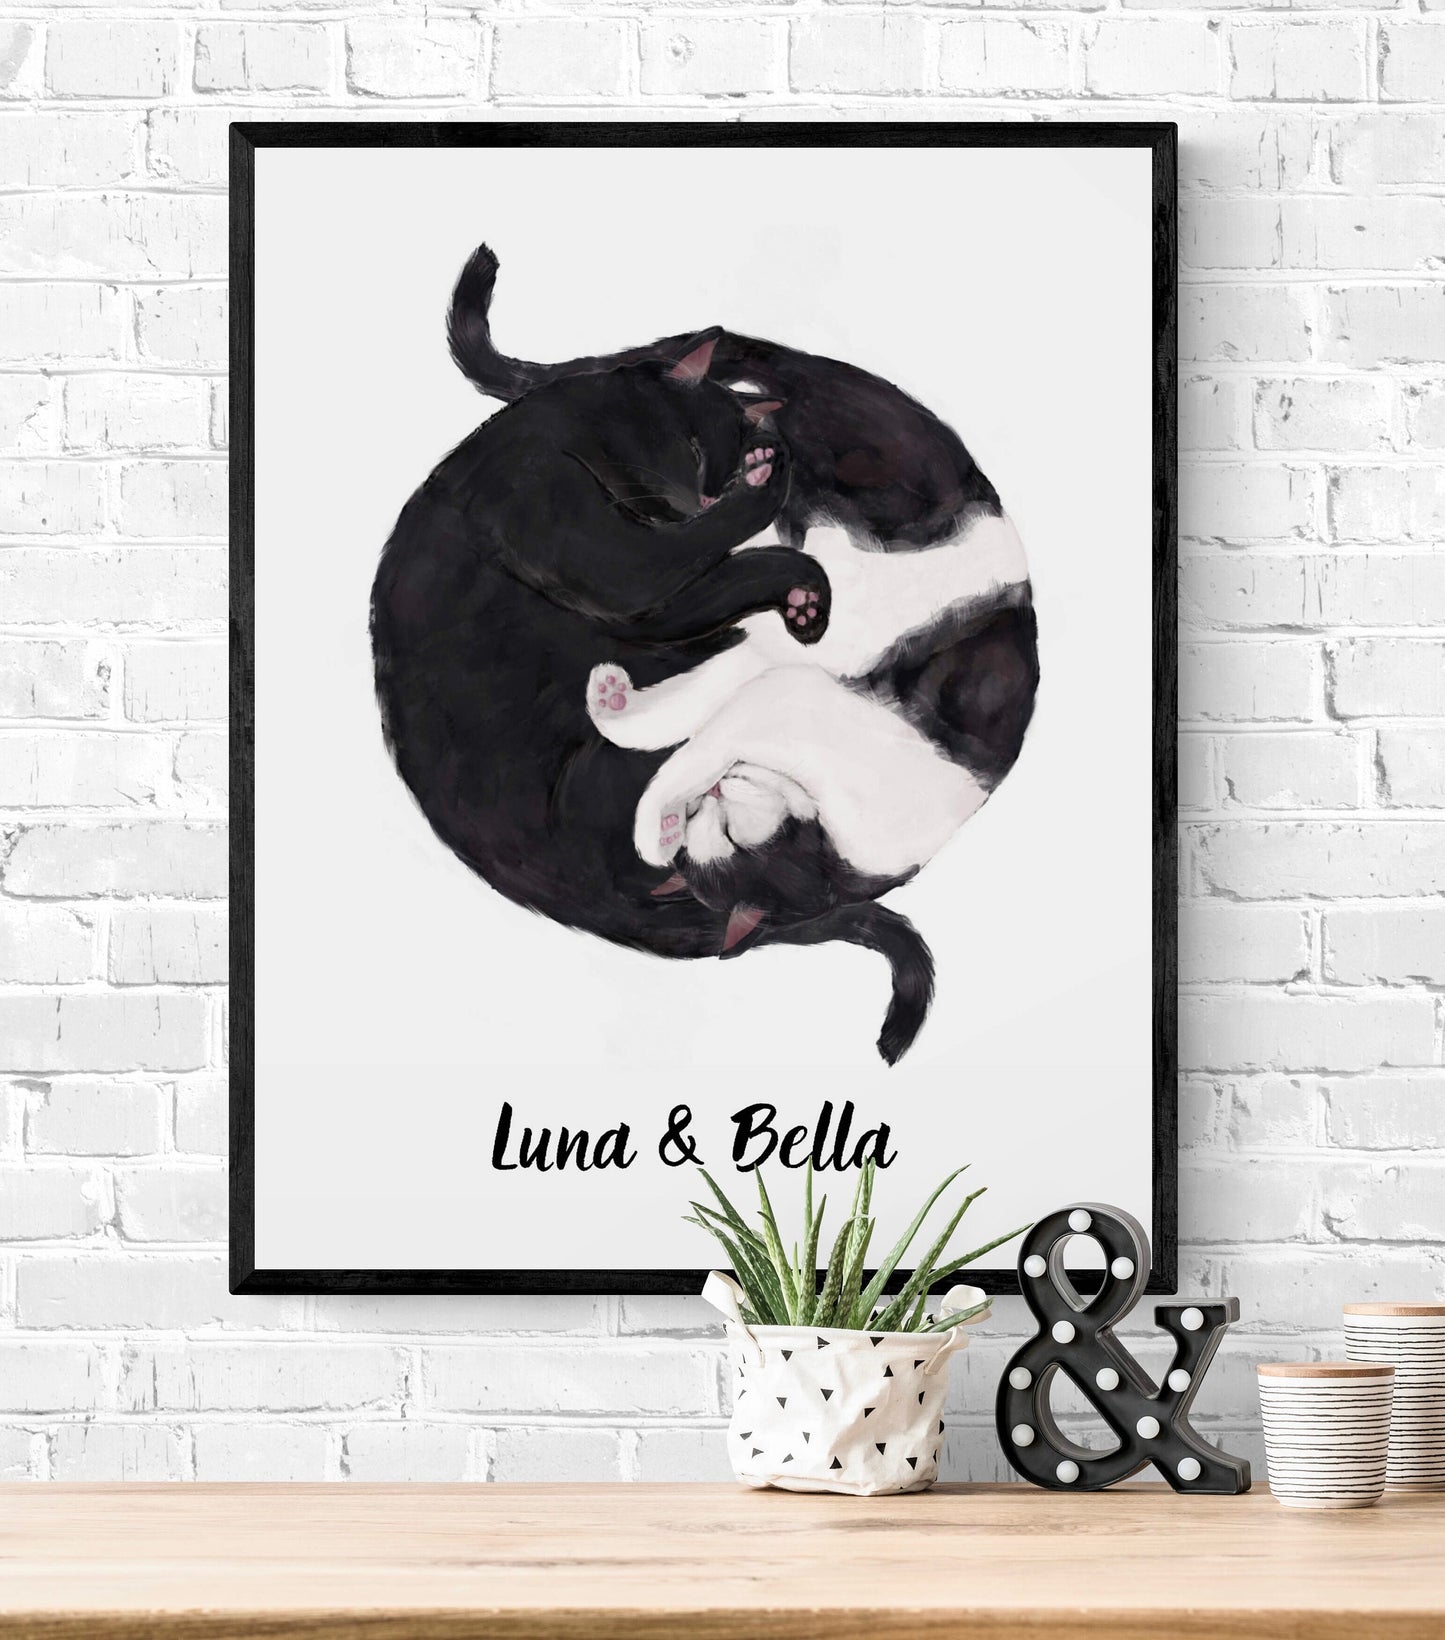 Customized Sleeping Black And Tuxedo Cat Print, Custom Cuddling White and Black Cat, Cat Illustration, Home Decor, Lazy Cat Painting